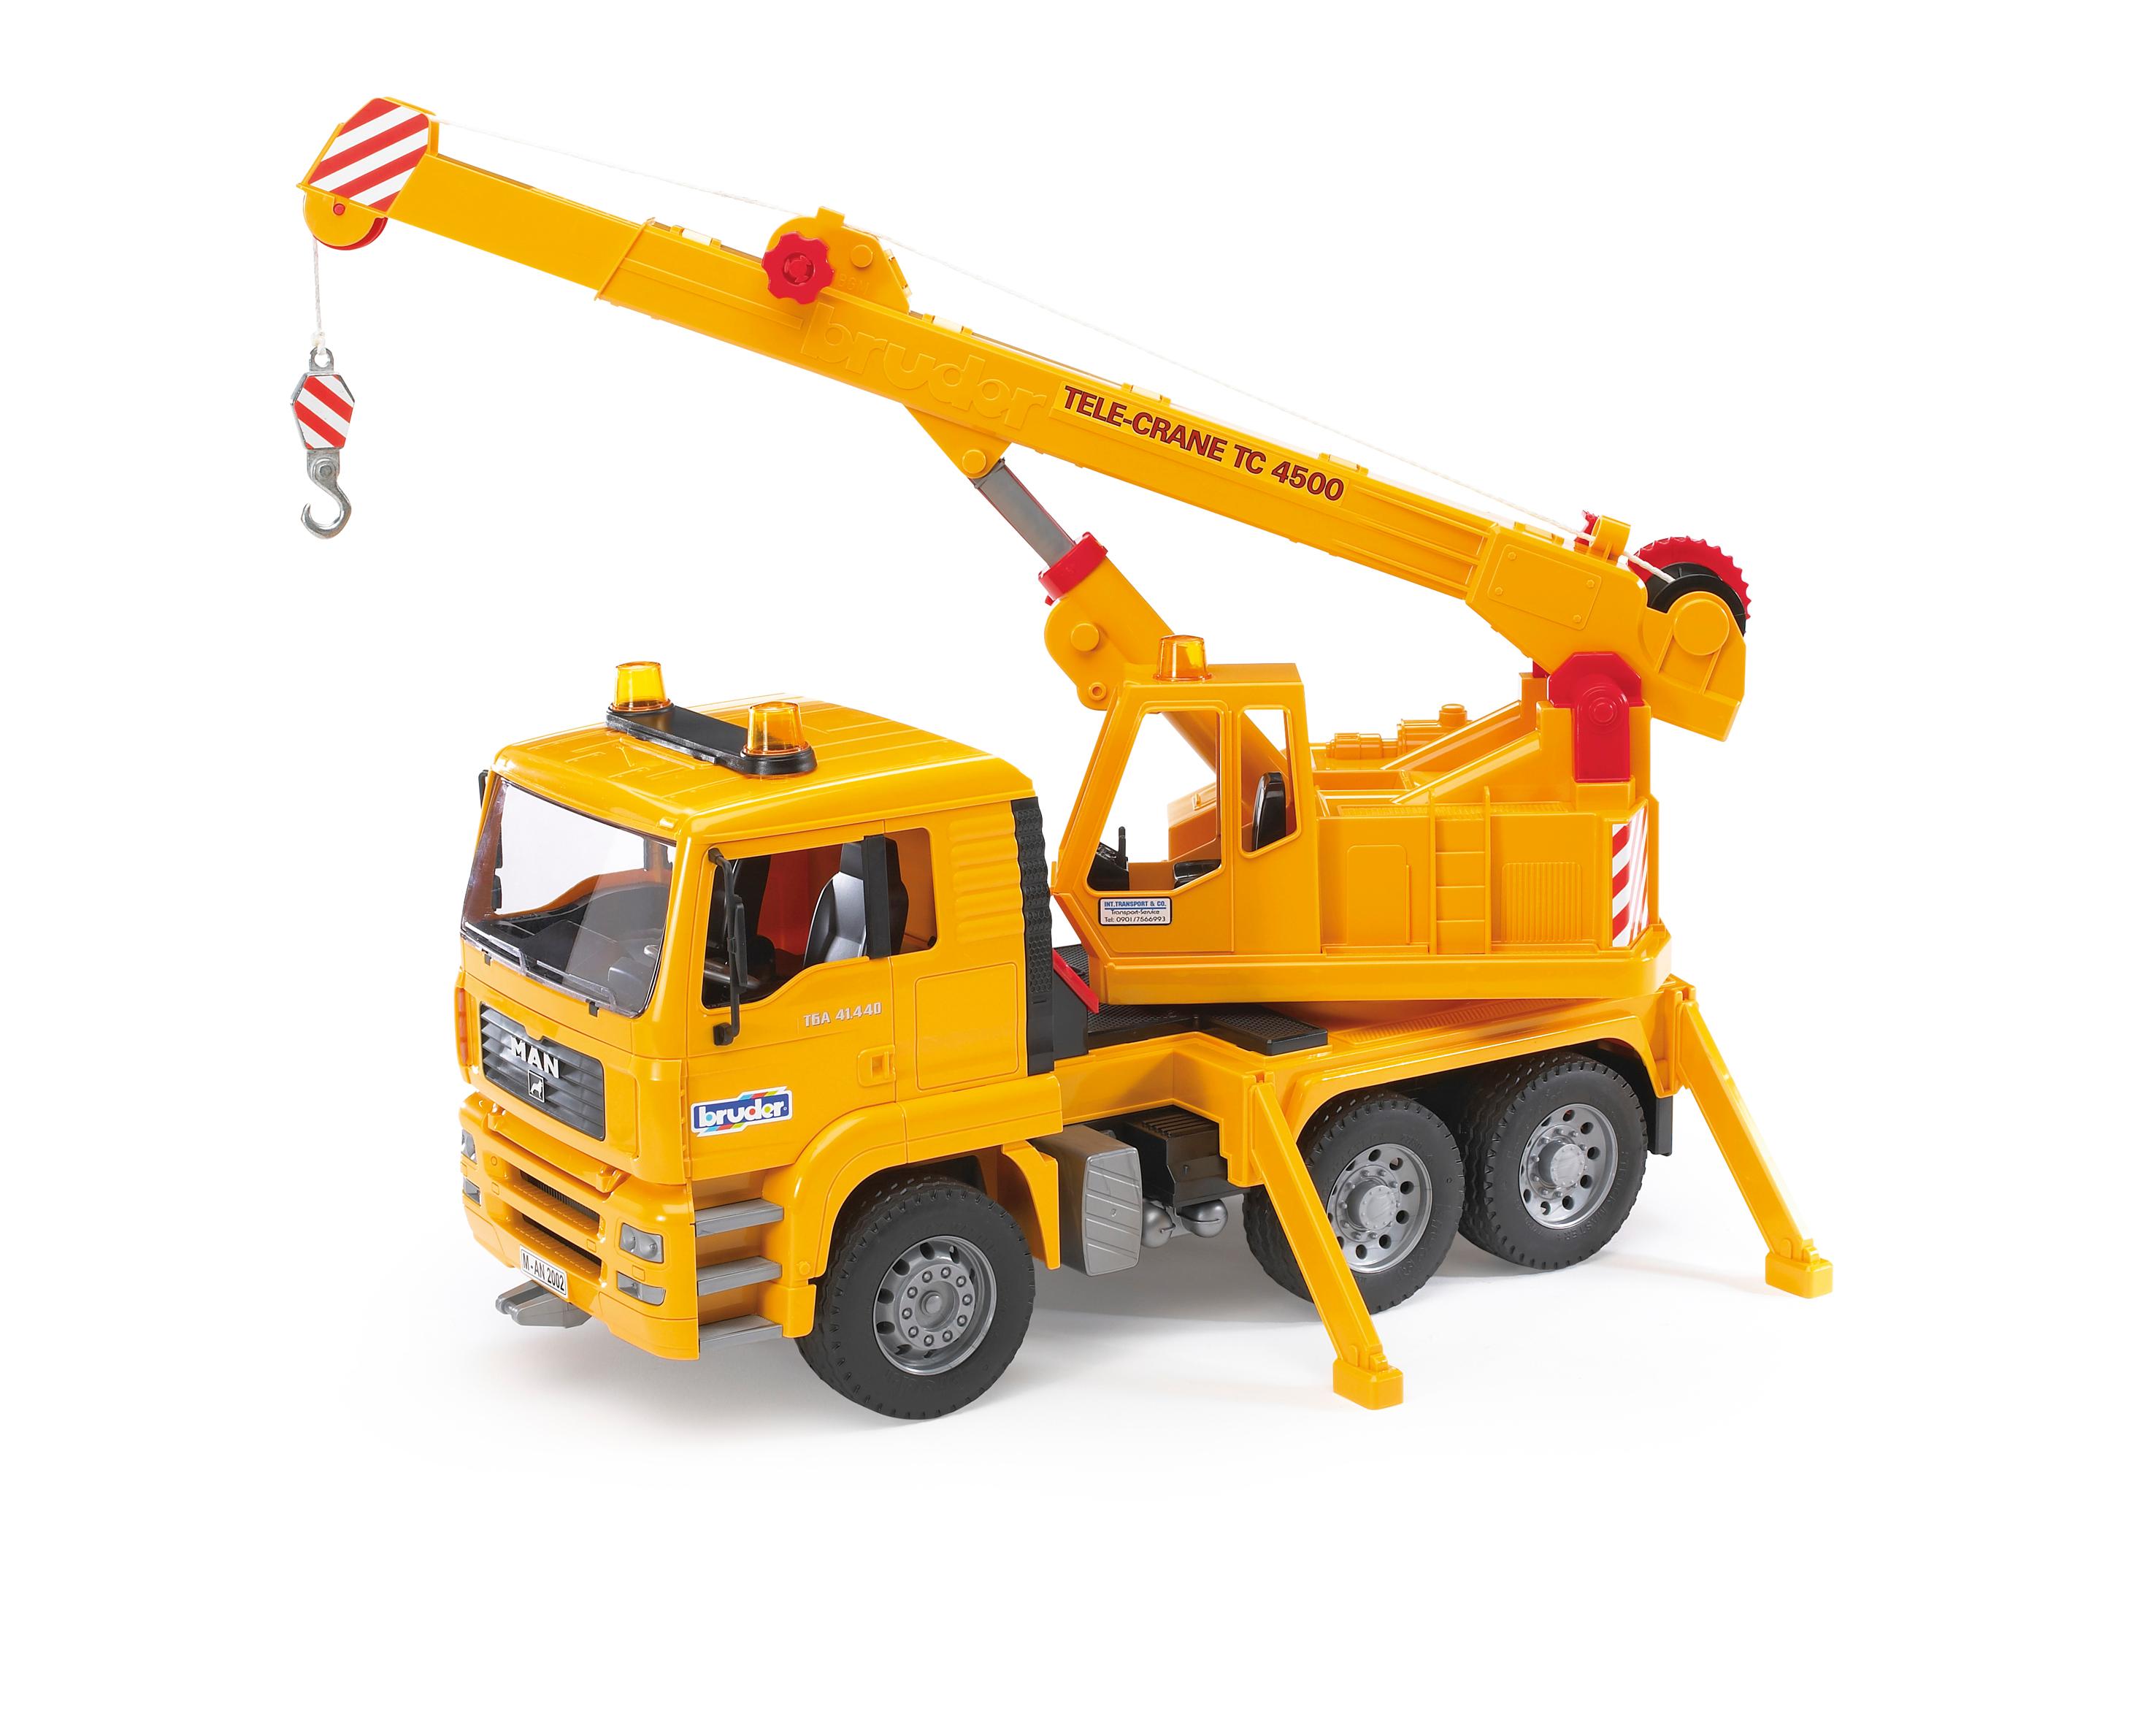 Amazon.com: Bruder MAN Crane Truck: Toys & Games